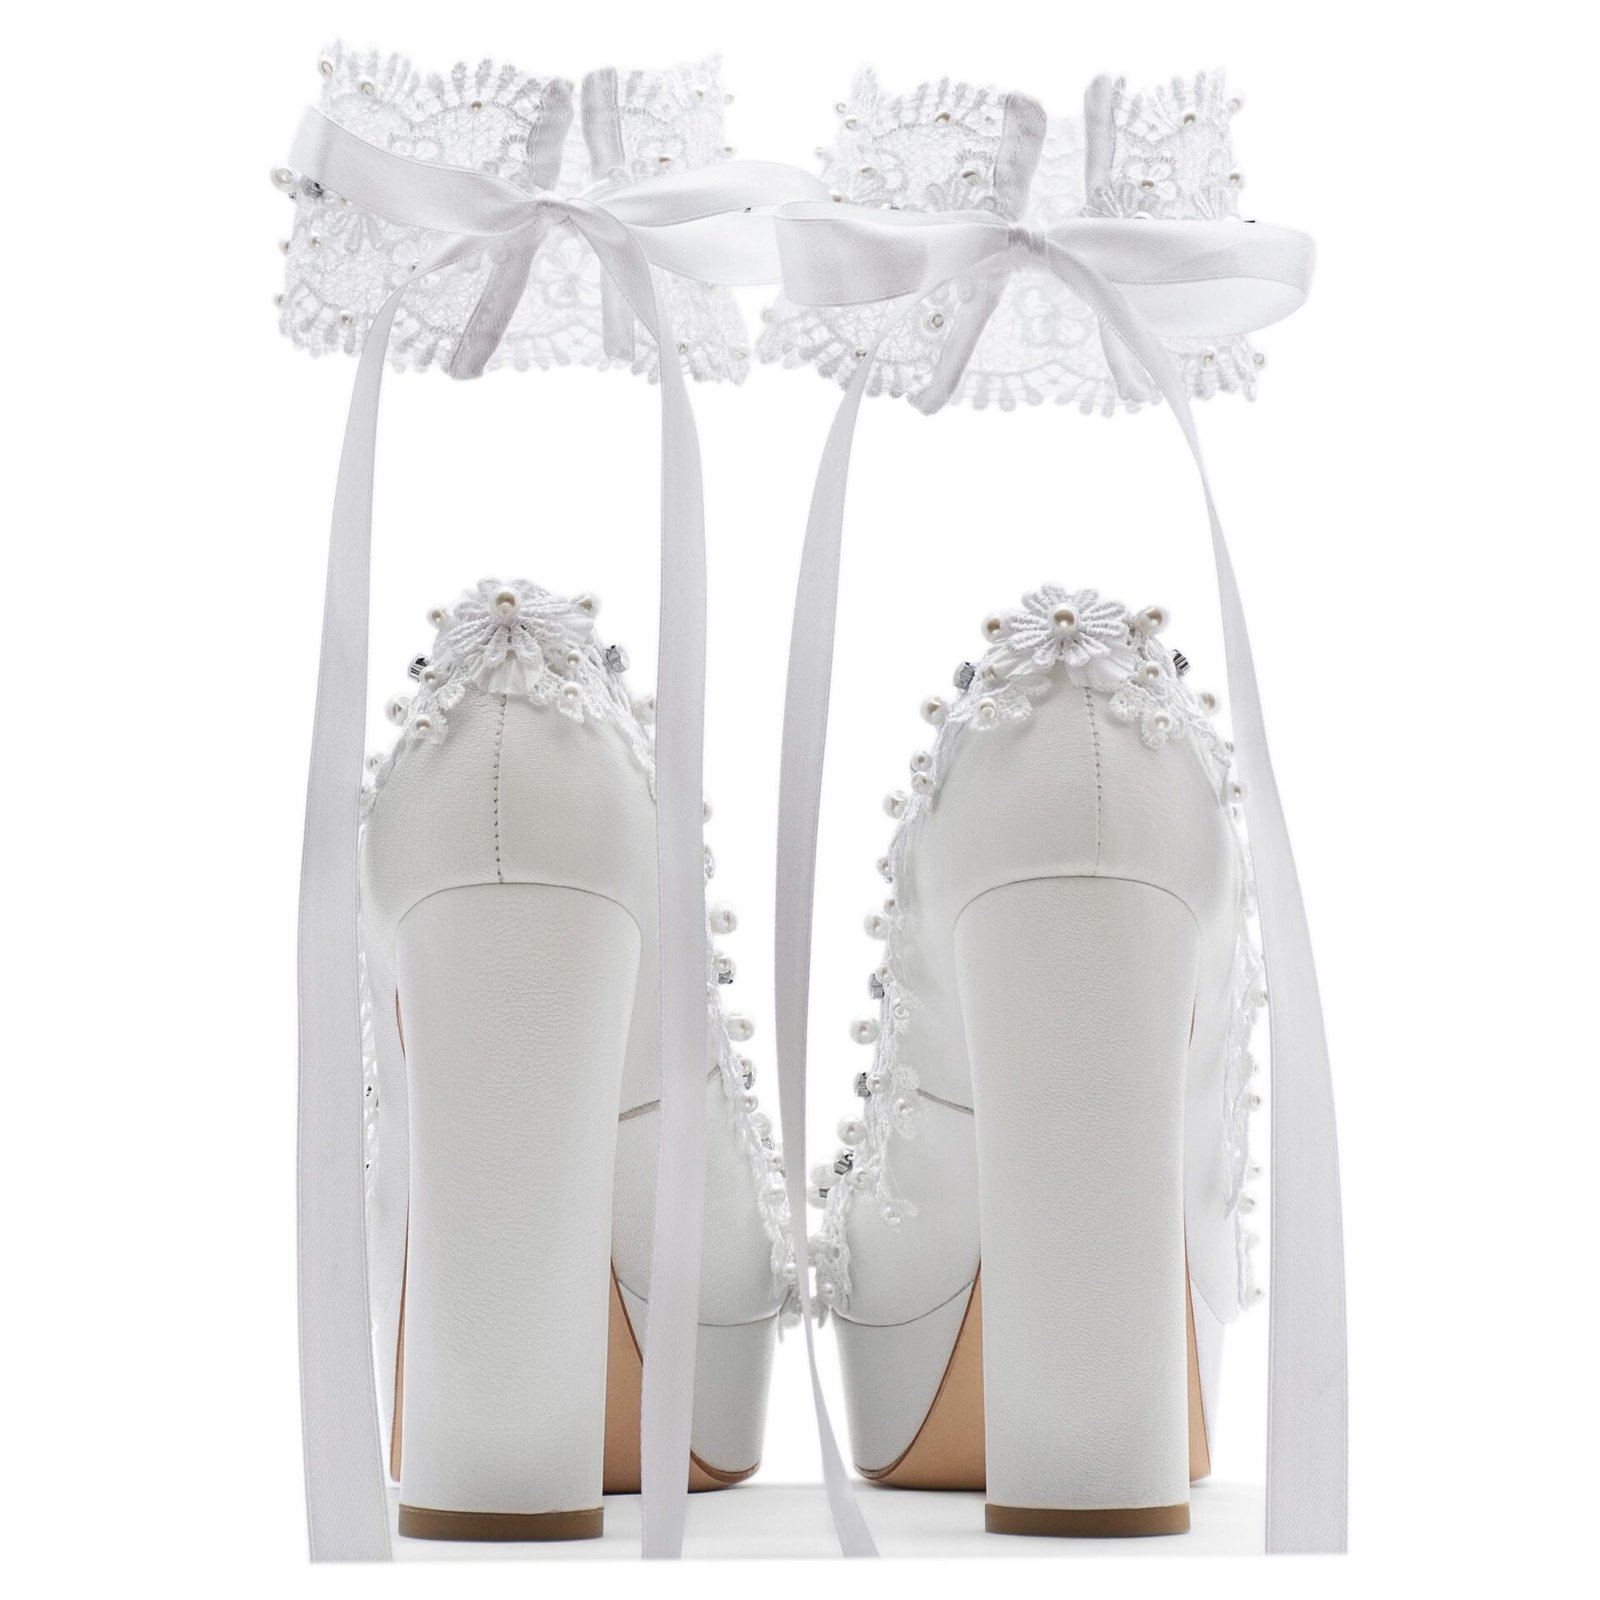 platform heels with lace & crystals